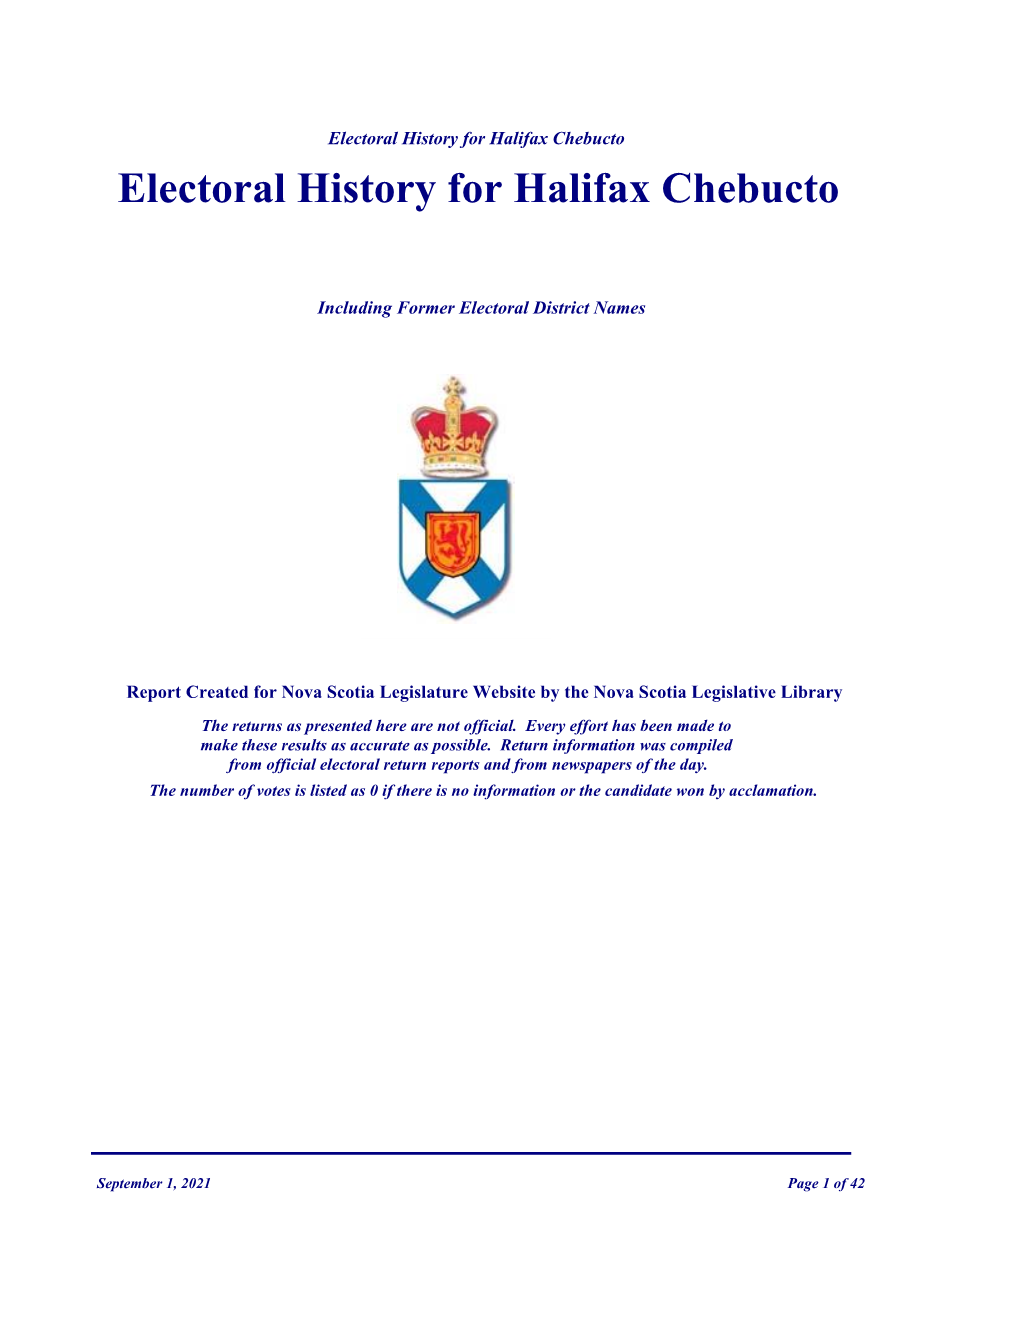 Electoral History for Halifax Chebucto Electoral History for Halifax Chebucto